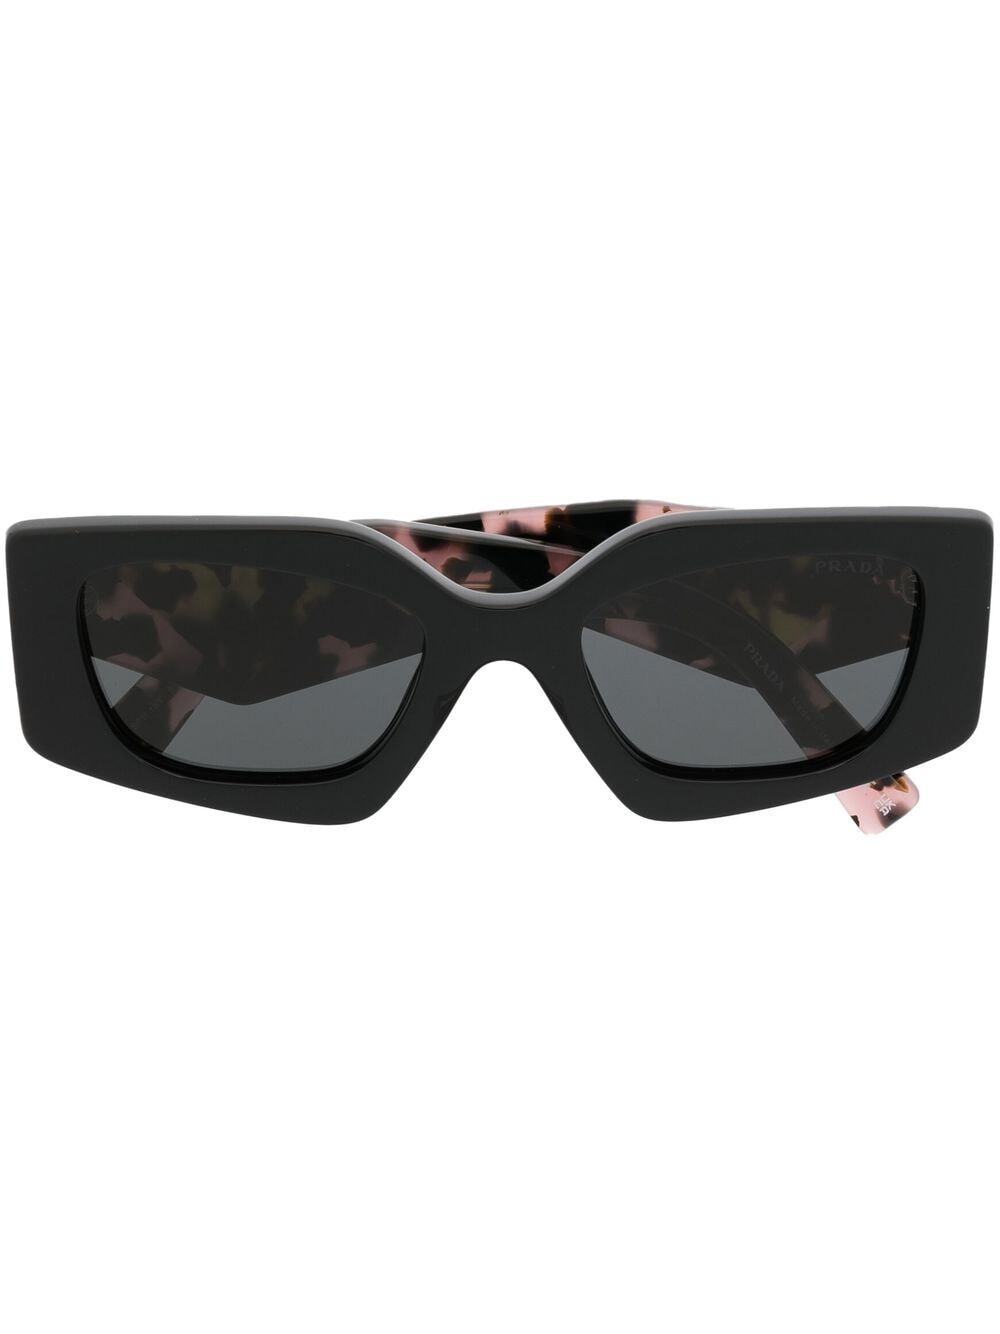 Prada Eyewear leopard print tinted sunglasses - Black